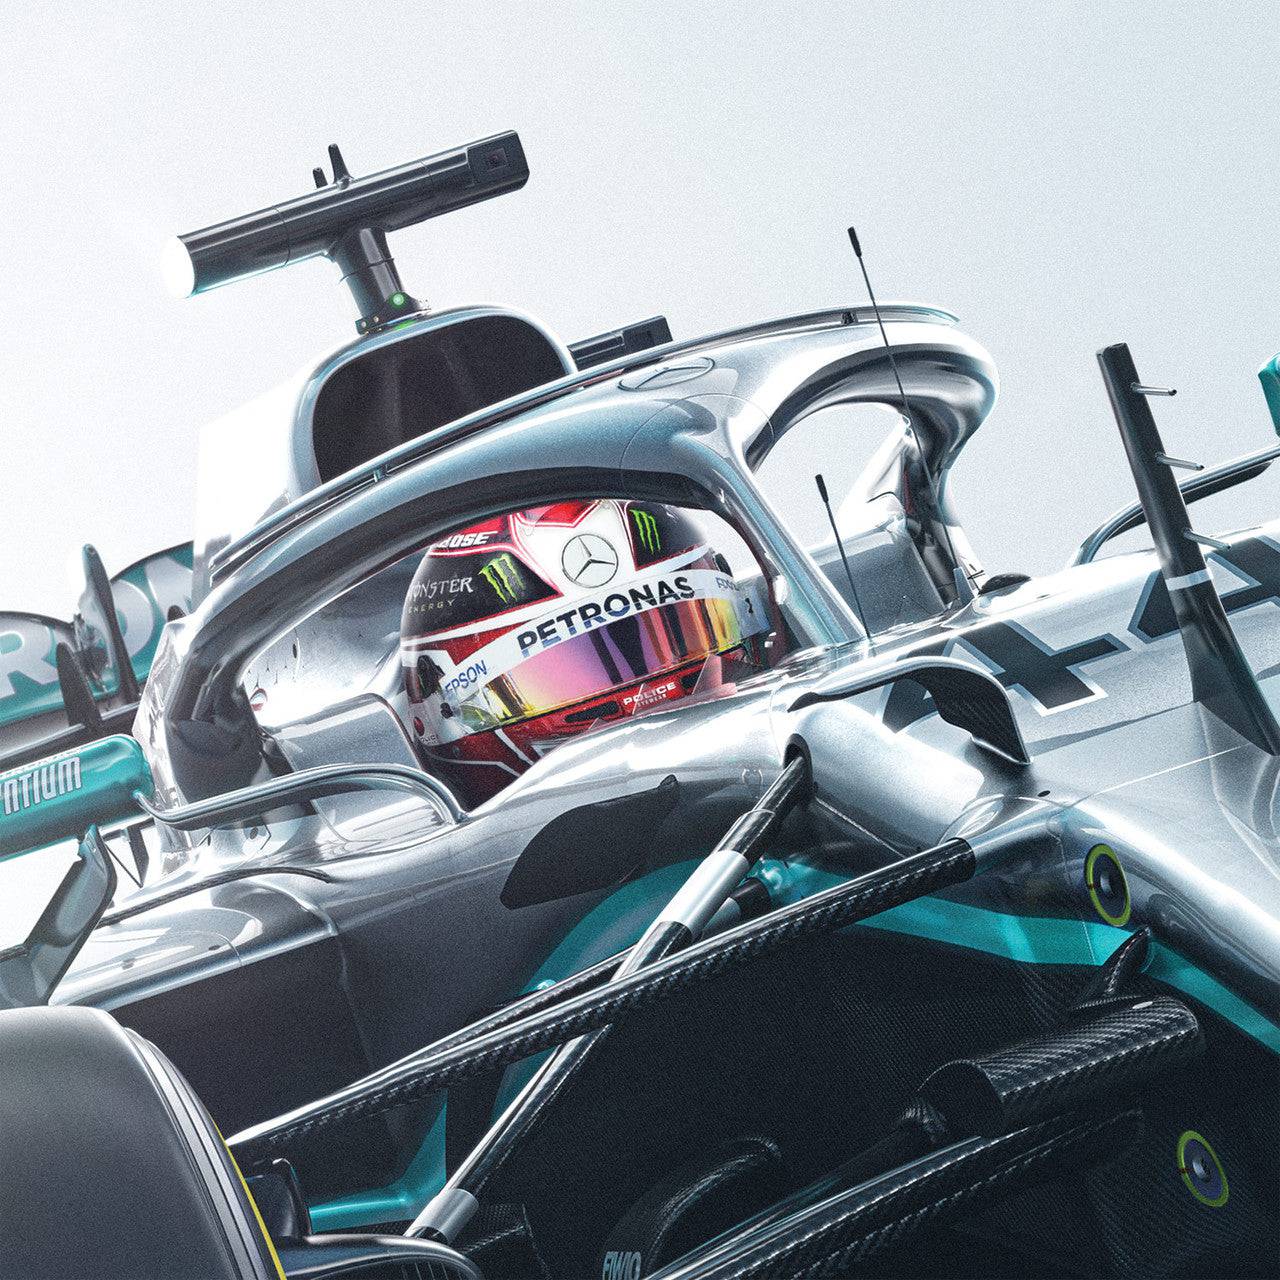 Mercedes-AMG Petronas Motorsport - 2019 - Team - Limited Edition